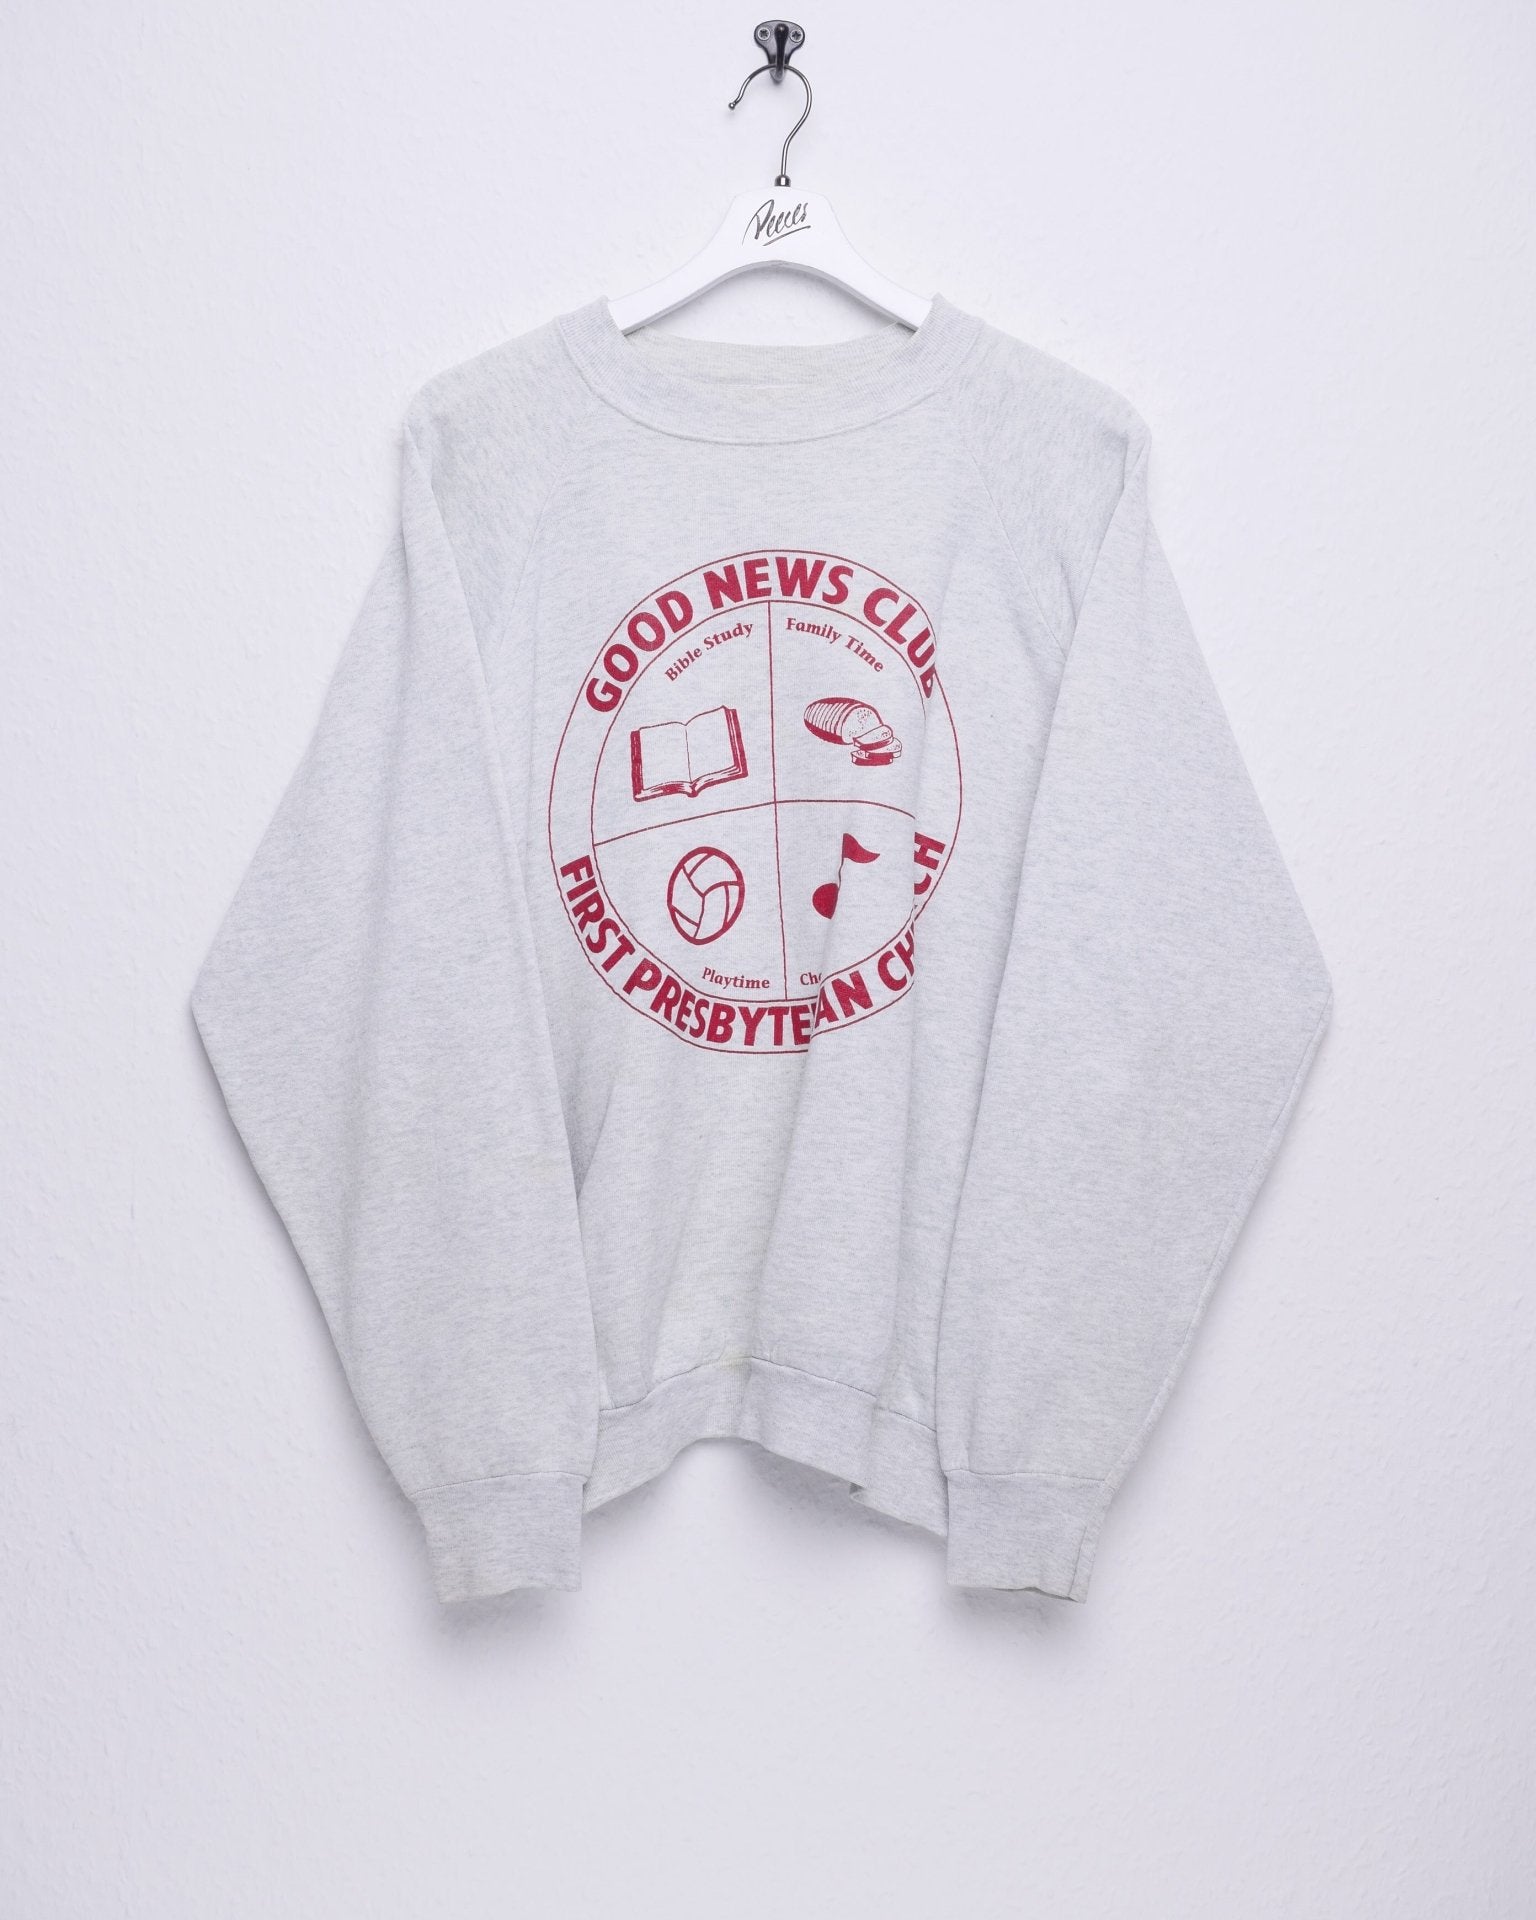 Good news club printed graphic Sweater - Peeces